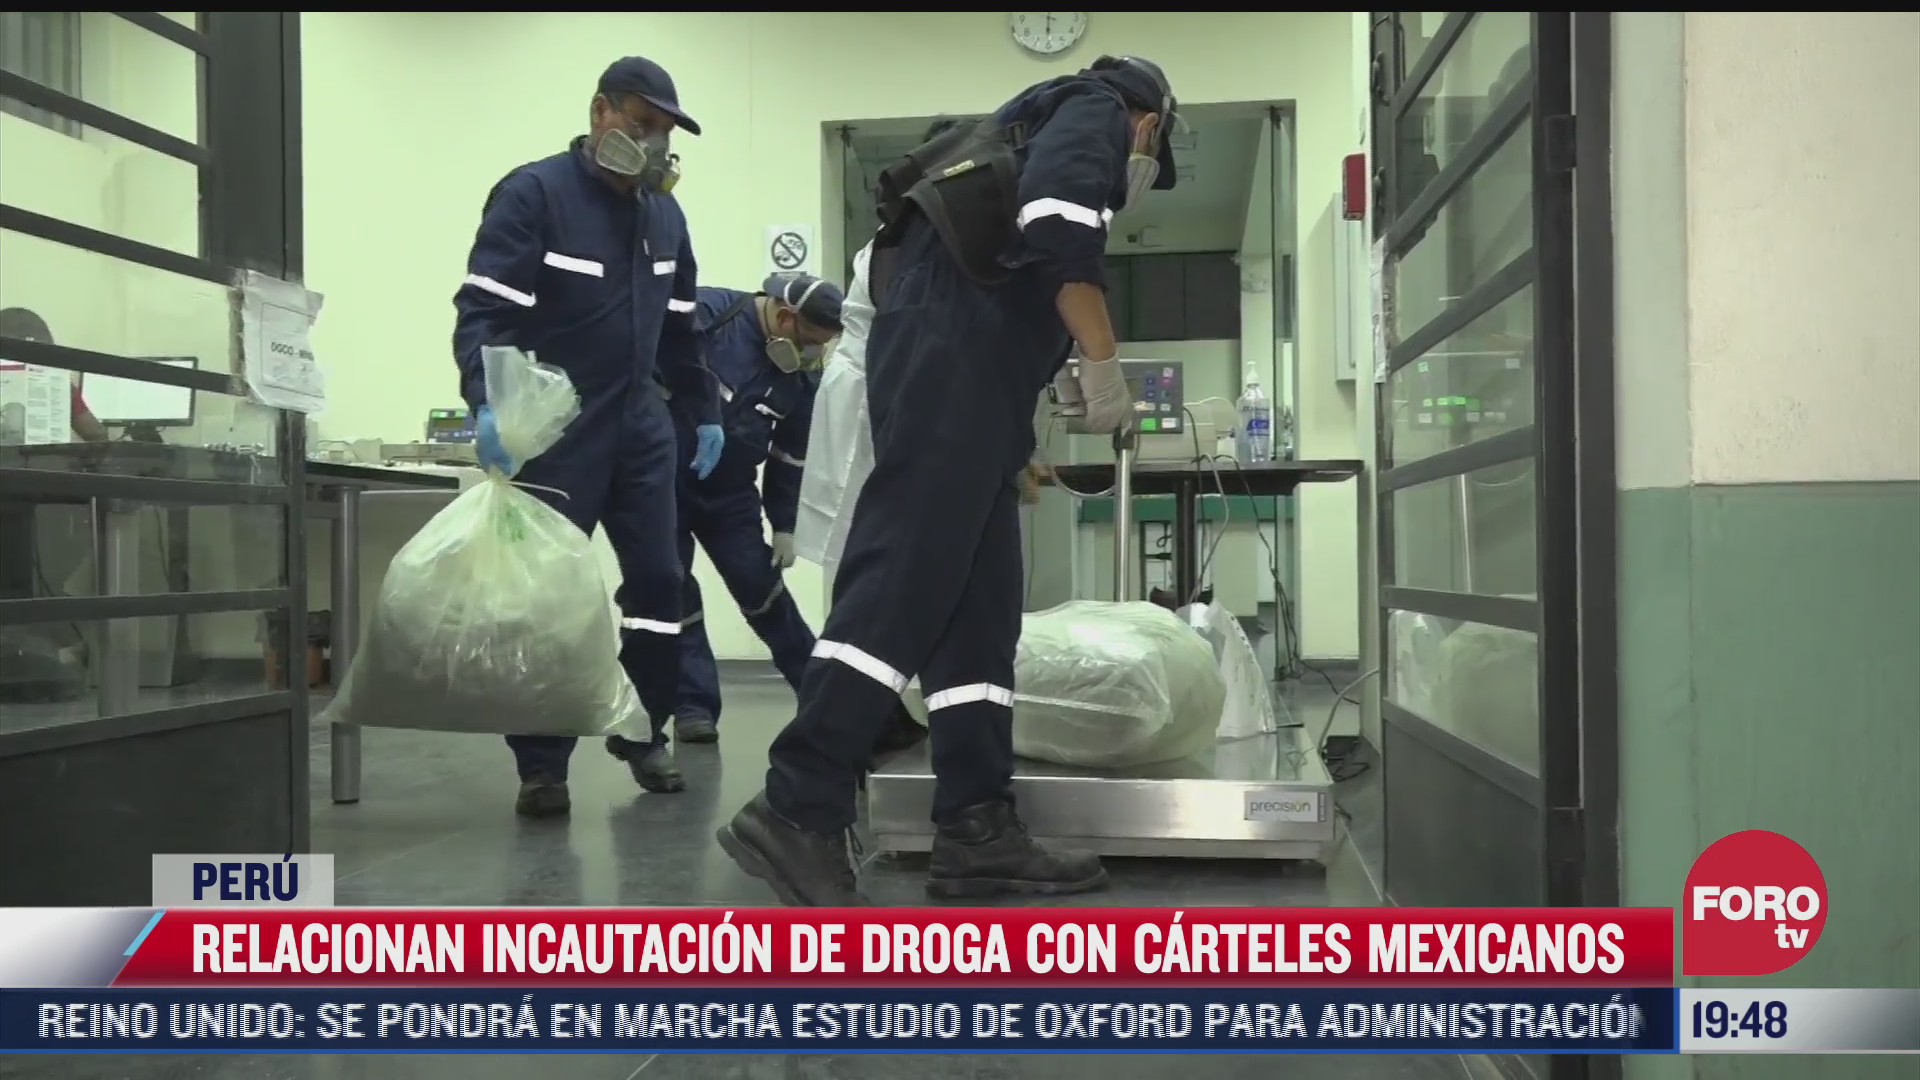 peru relaciona incautacion de droga con carteles mexicanos